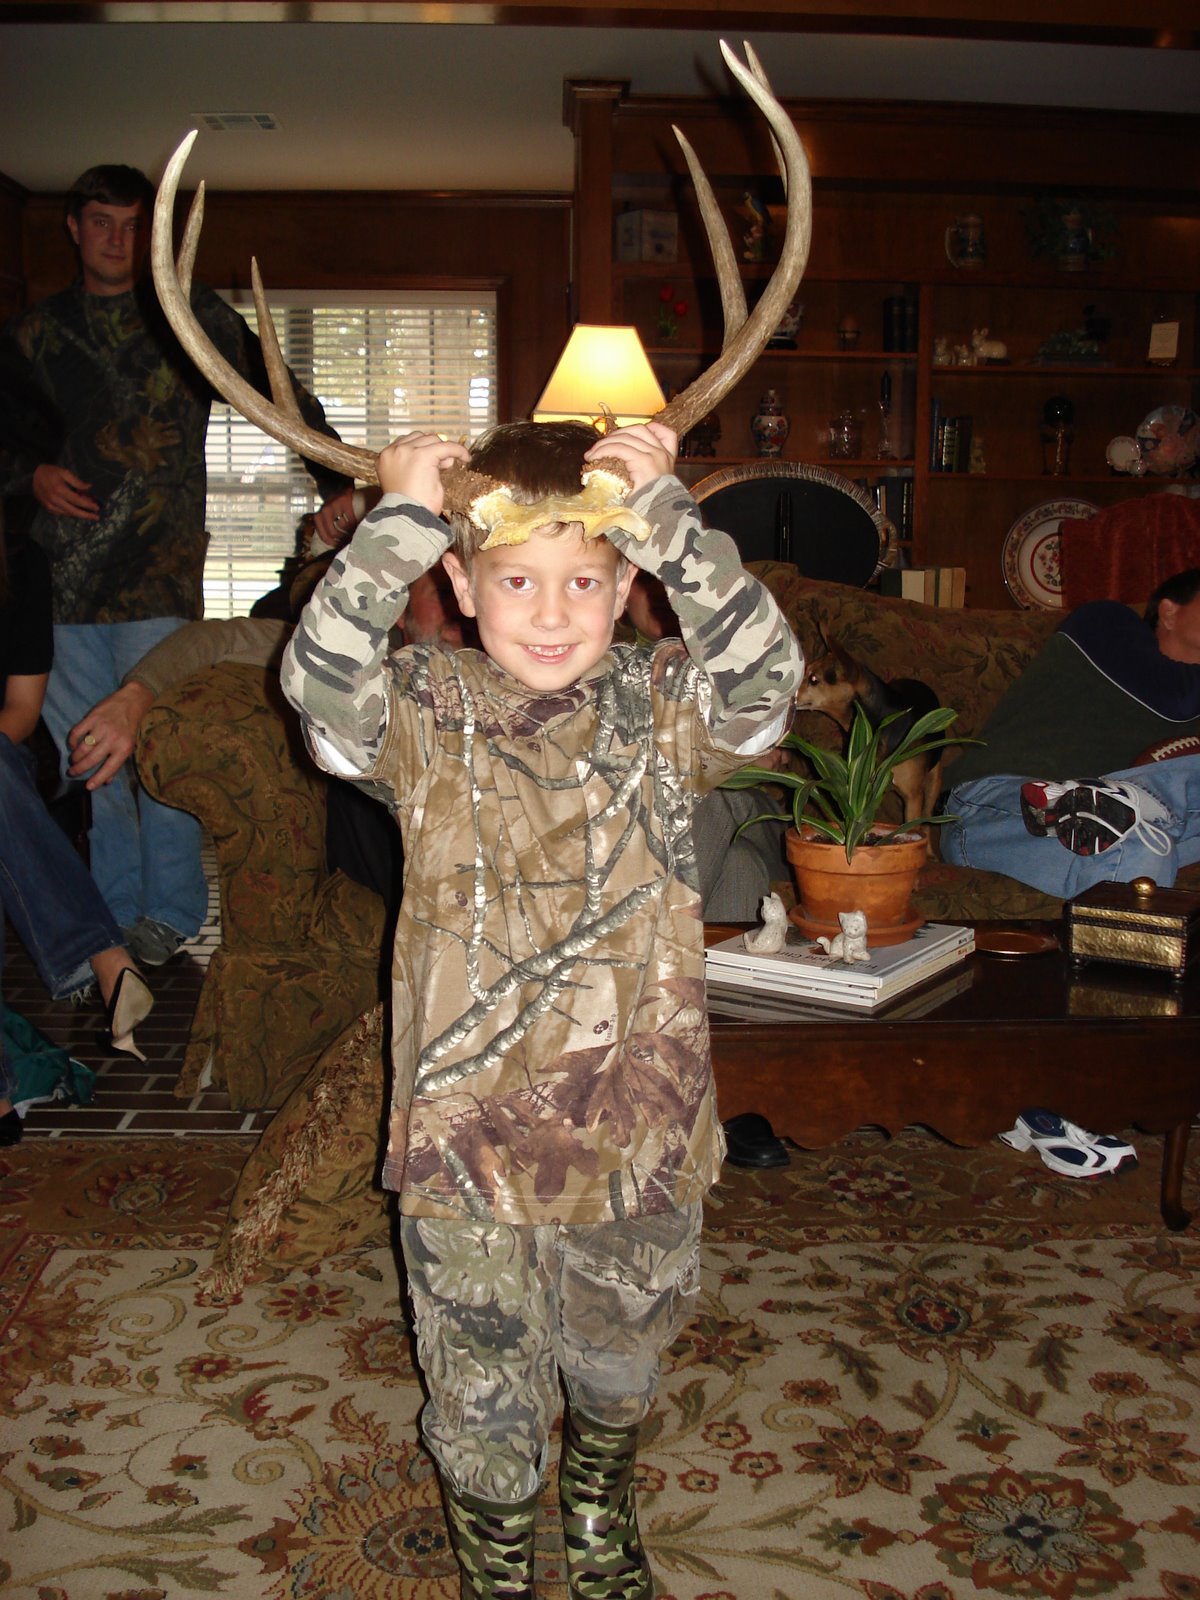 [Brandon+with+deer+horns.JPG]